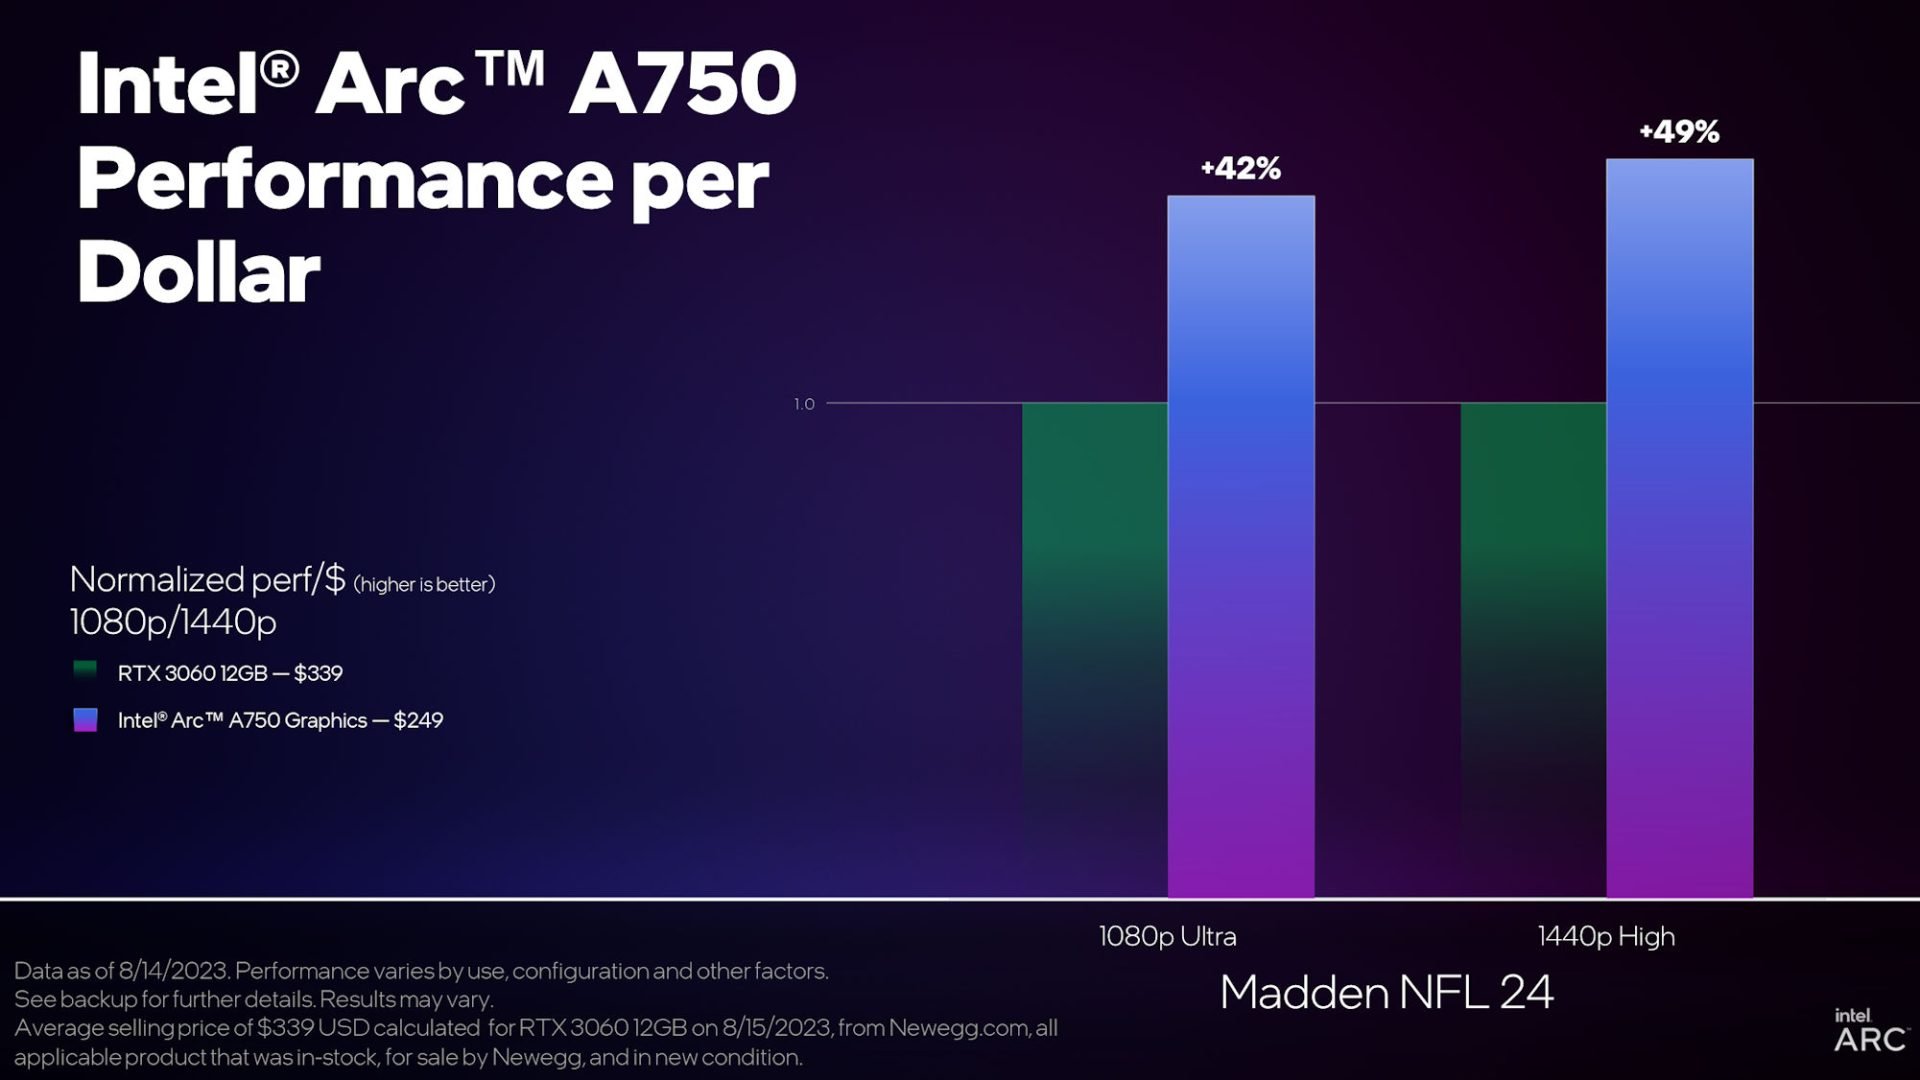 Madden NFL 24 Destekli Intel Arc 31.0.101.4644 Grafik Surucusu Cikti